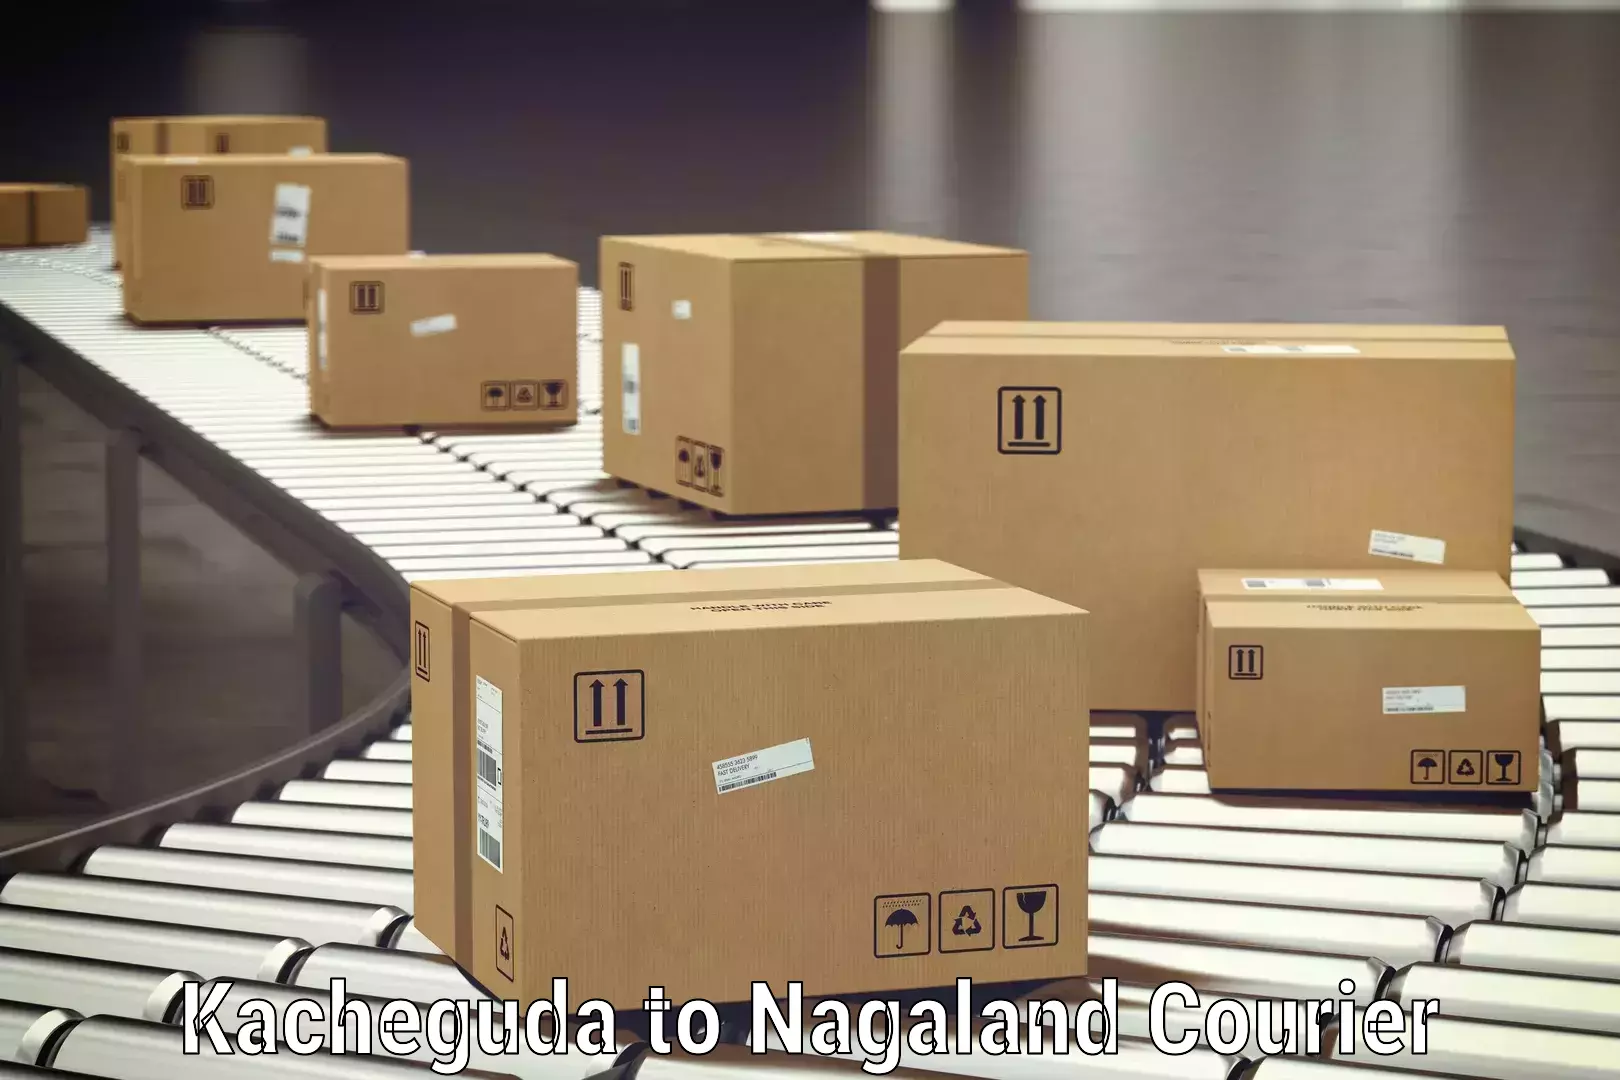 Luggage transport consultancy Kacheguda to Nagaland